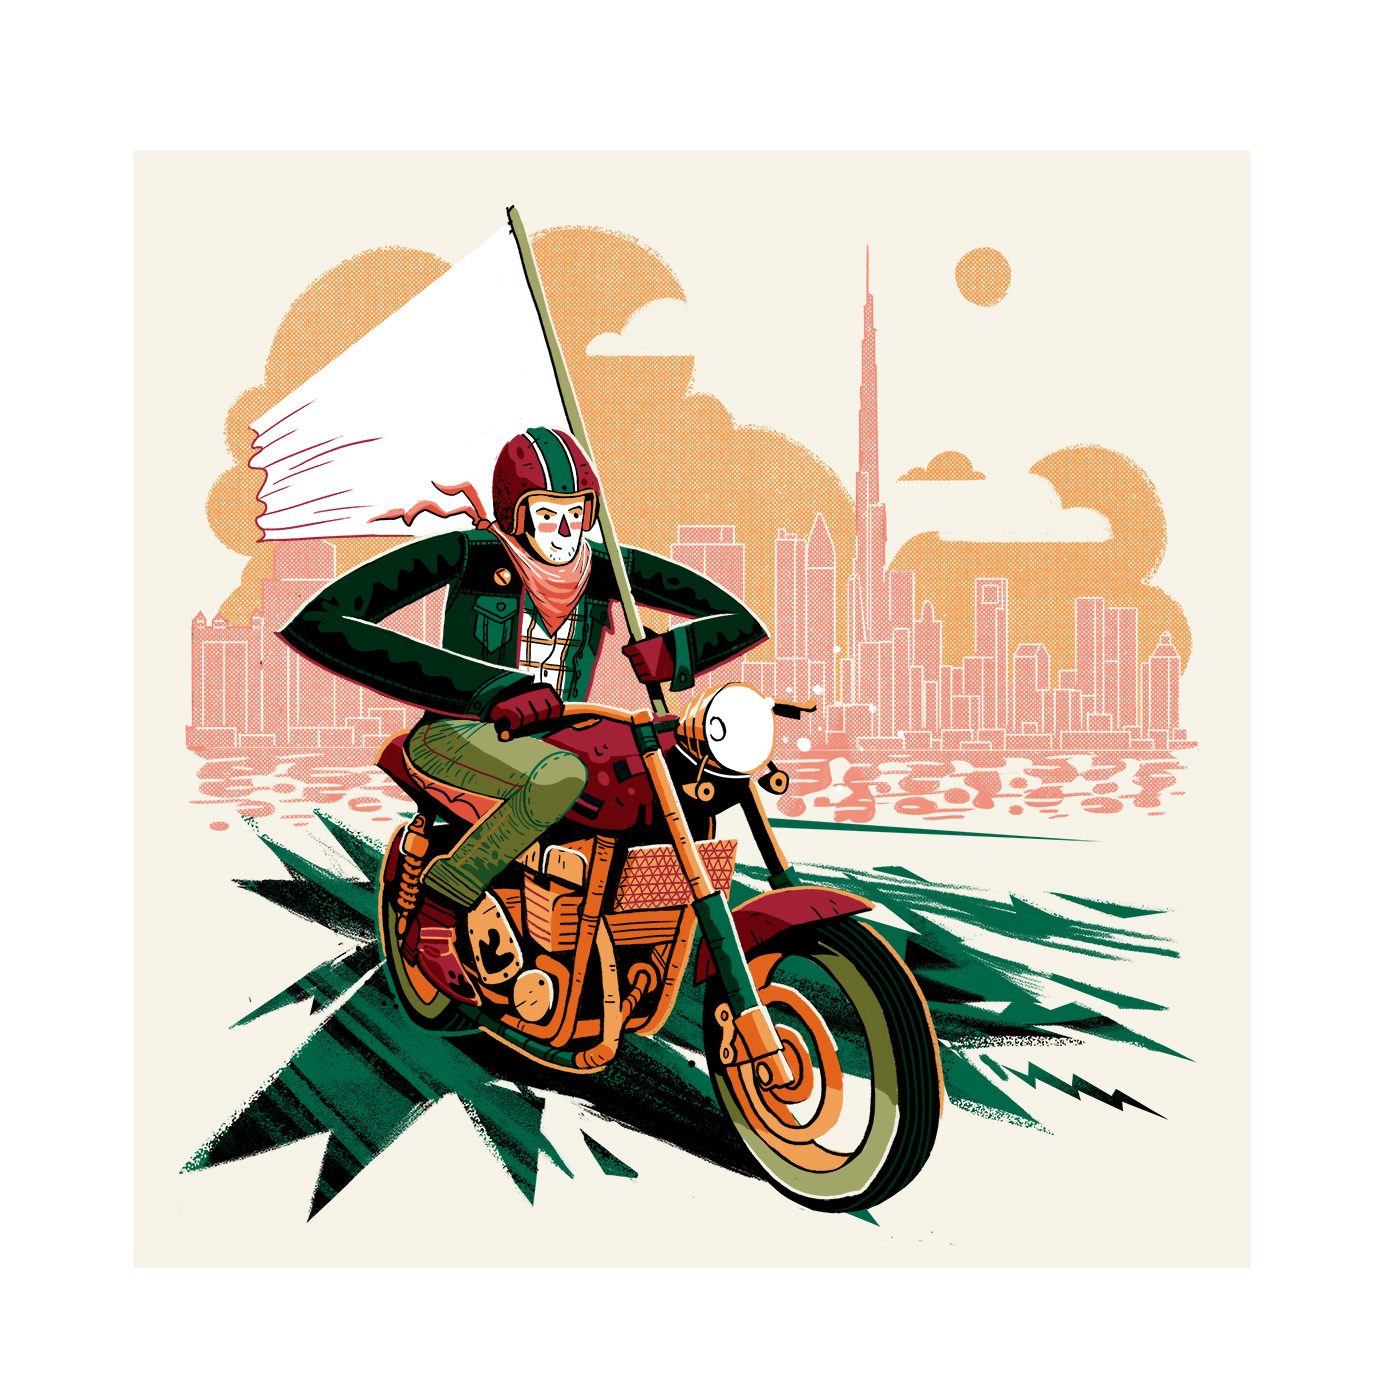 Pizza caferacer motorbike dubai UAE 800PIZZA delivery icons biker texture